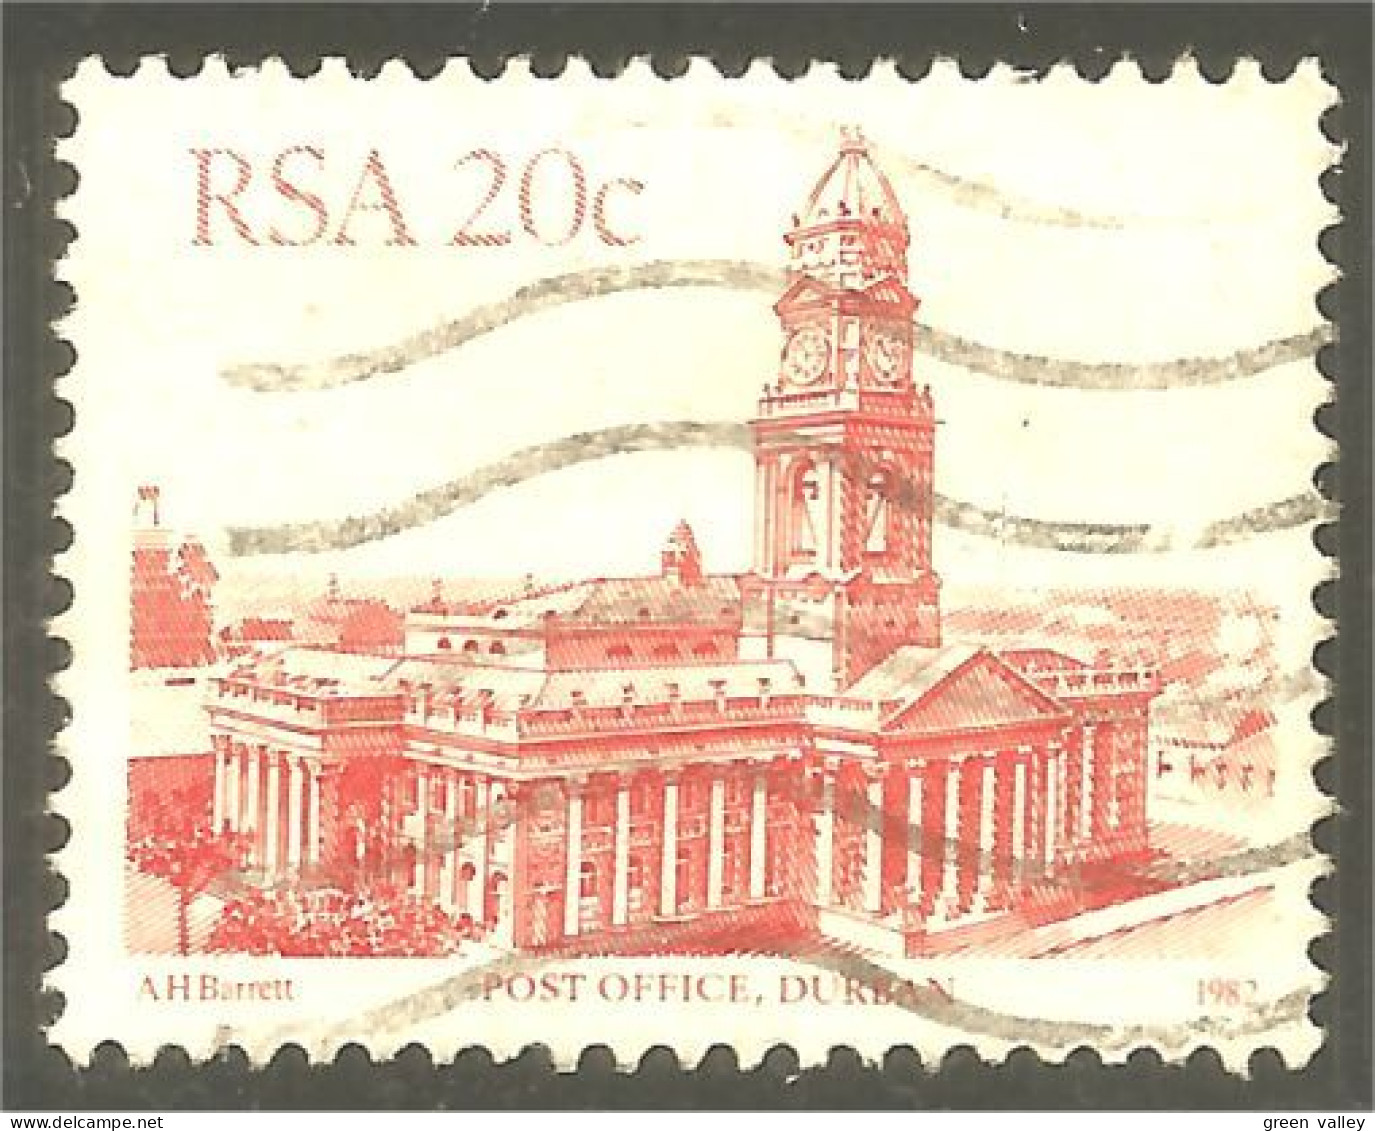 XW01-1256 South Africa Durban Post Office Bureau Postes - Oblitérés